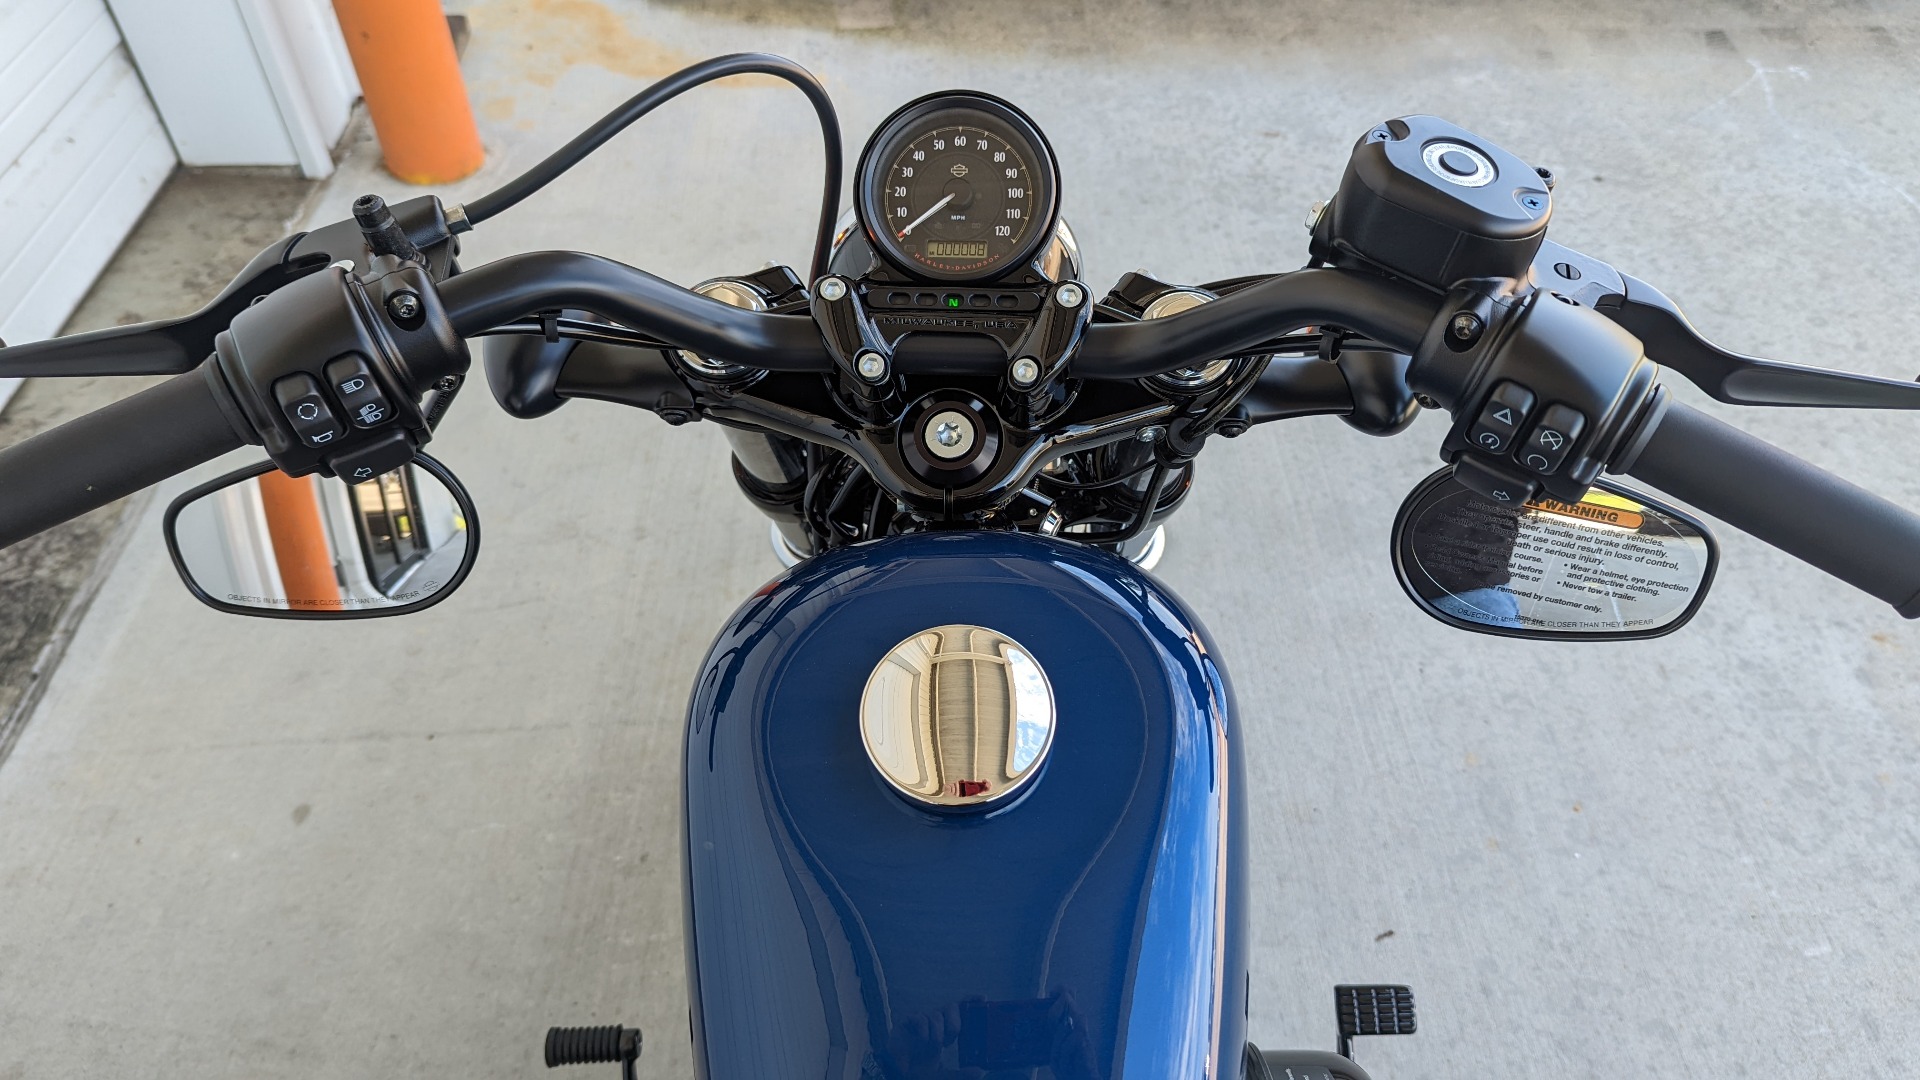 2022 Harley-Davidson Forty-Eight® in Monroe, Louisiana - Photo 11